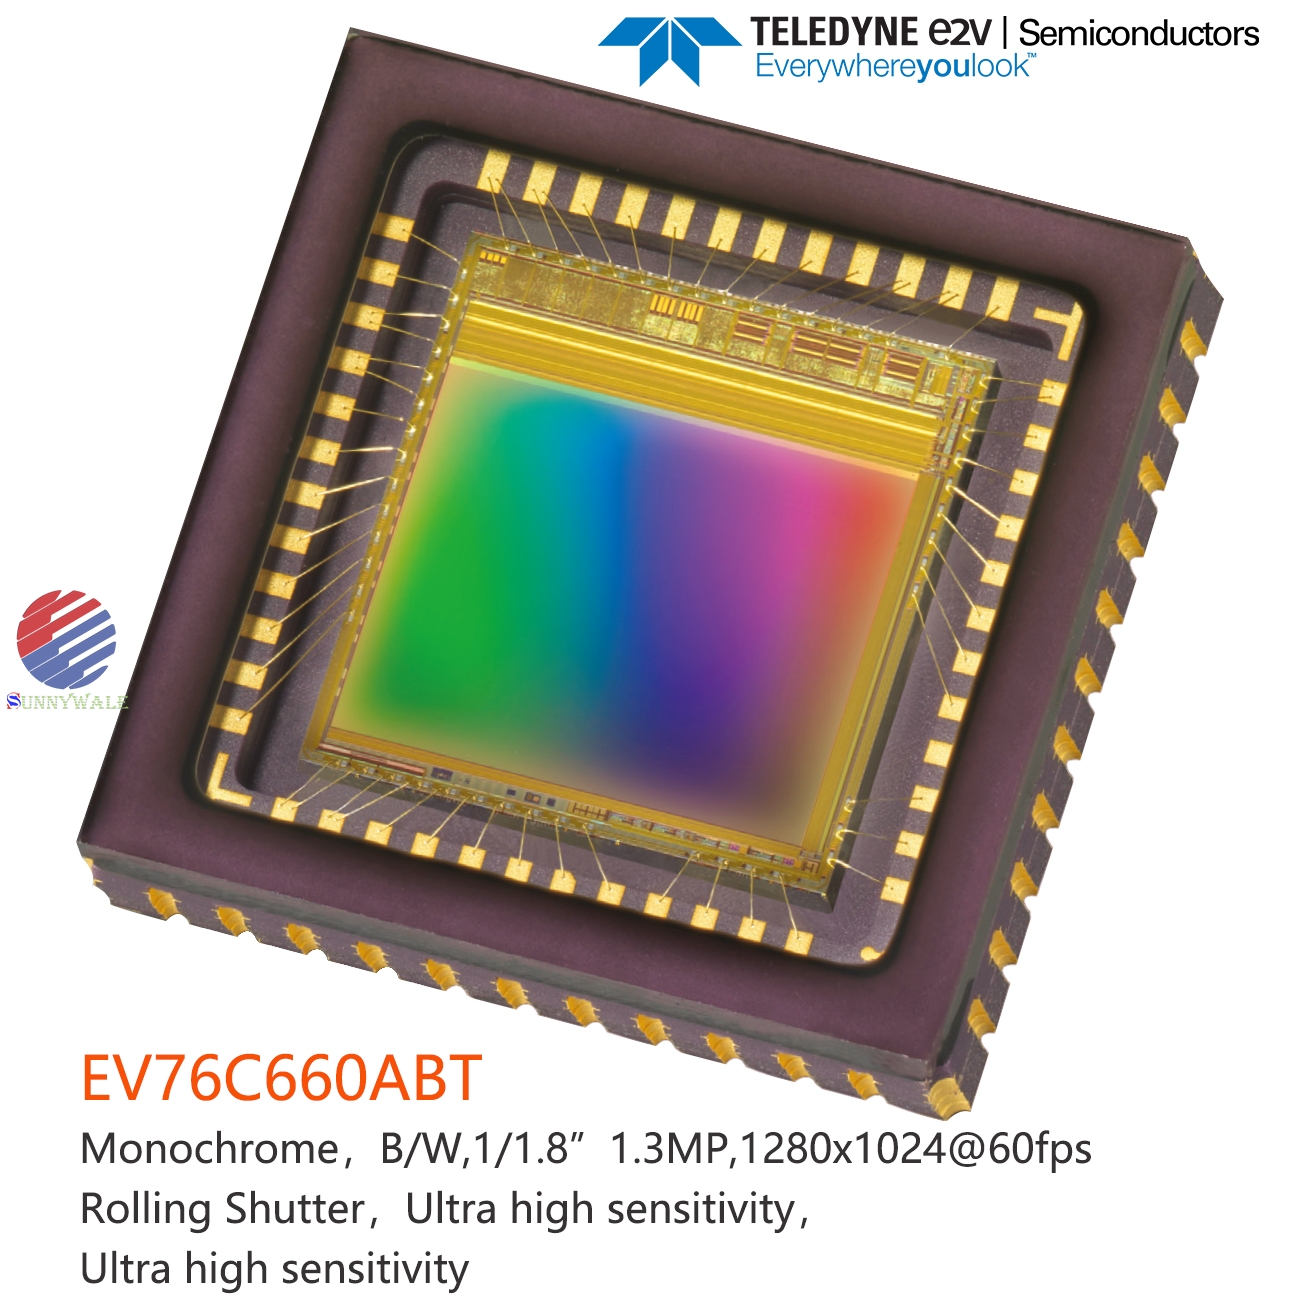 Teledyne e2v Semiconductors, EV76C660ABT,EV76C660ACT, e2v ,1/1.8 1.3 Mpixels CMOS,B&W monochrome iMage sensor, Ultra high sensitivity ,CMOS Image Sensor ,Ultra-low illumination photosensitive chip,Low light CMOS